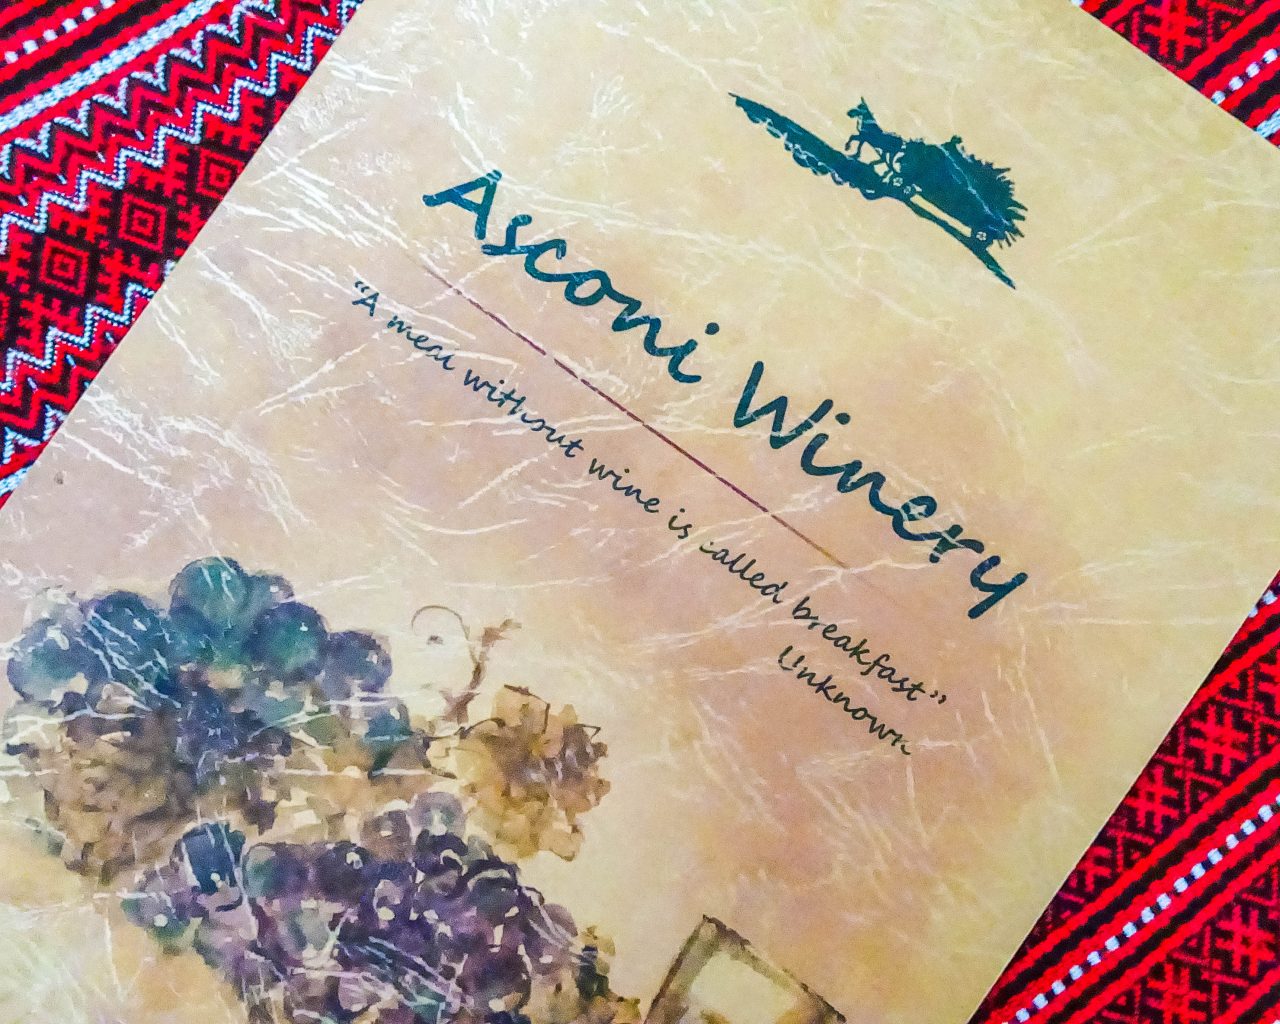 Asconi-winery-menukaart-met-quote